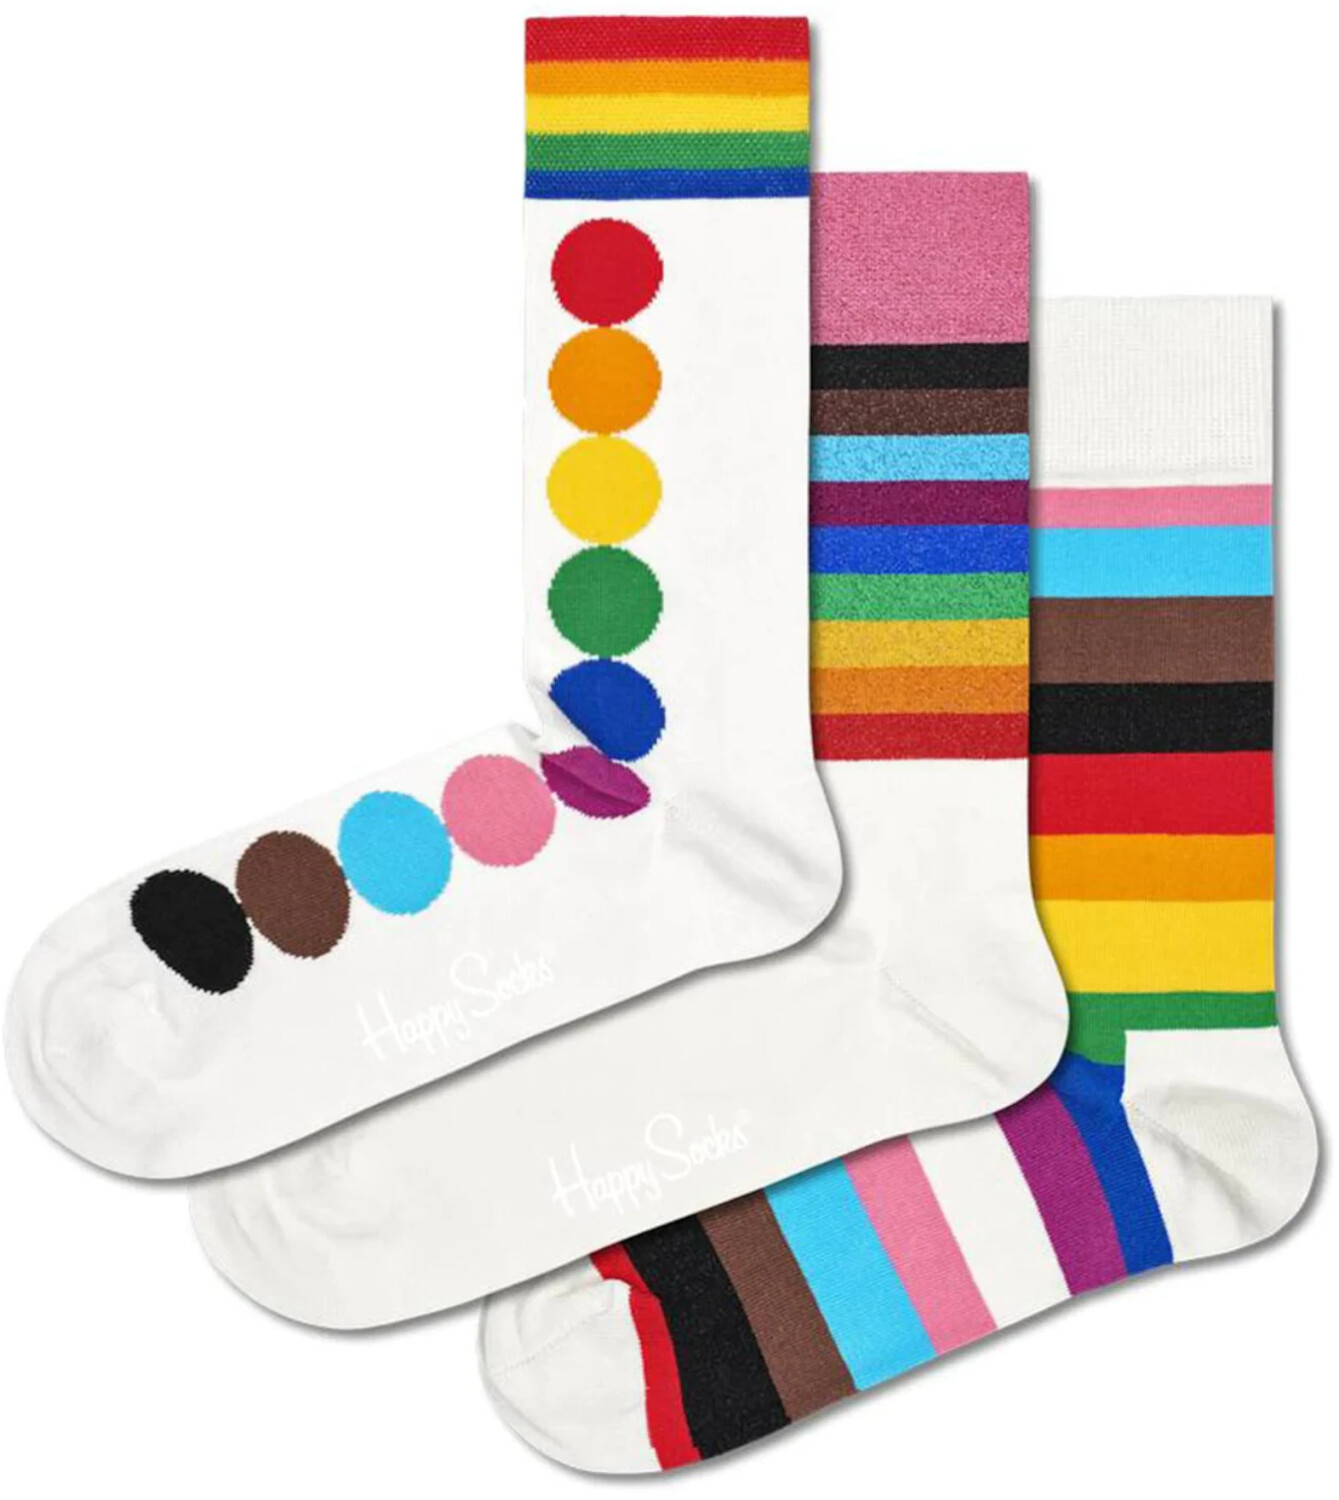 Happy Socks 3-Pack Pride Socks Gift Set (XPRD08-1300) ab 26,25 € |  Preisvergleich bei